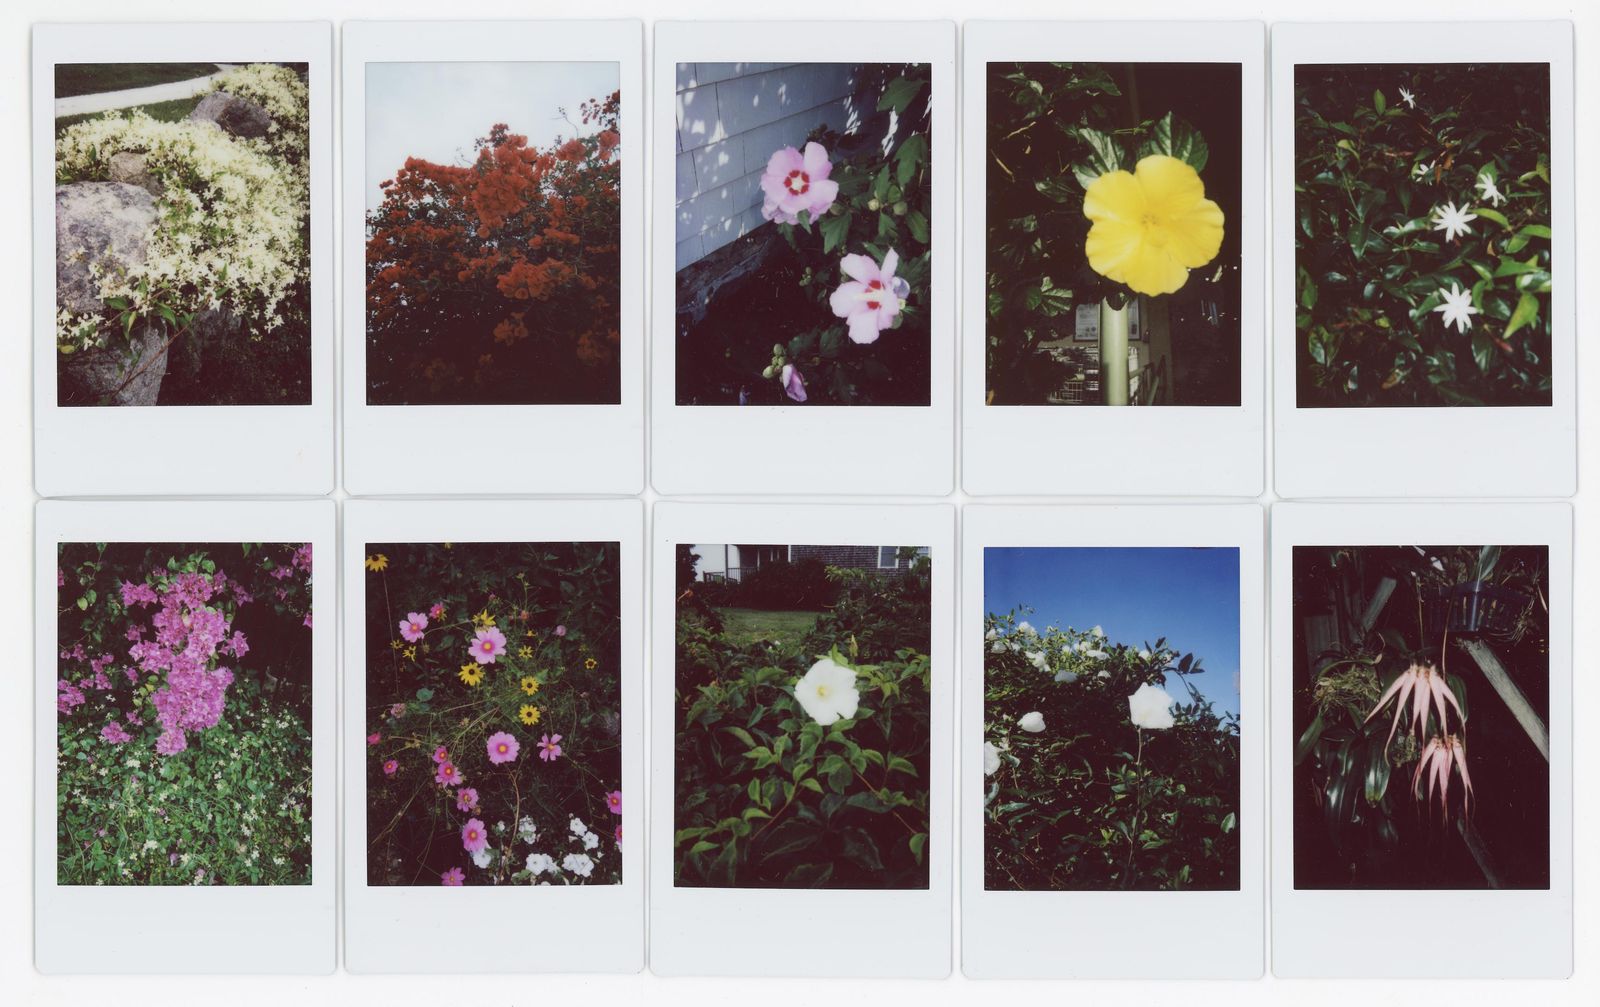 © RACHEL TREIDE - "A Minute Fraction of All the Flowers I've Ever Seen," photographs 91-100